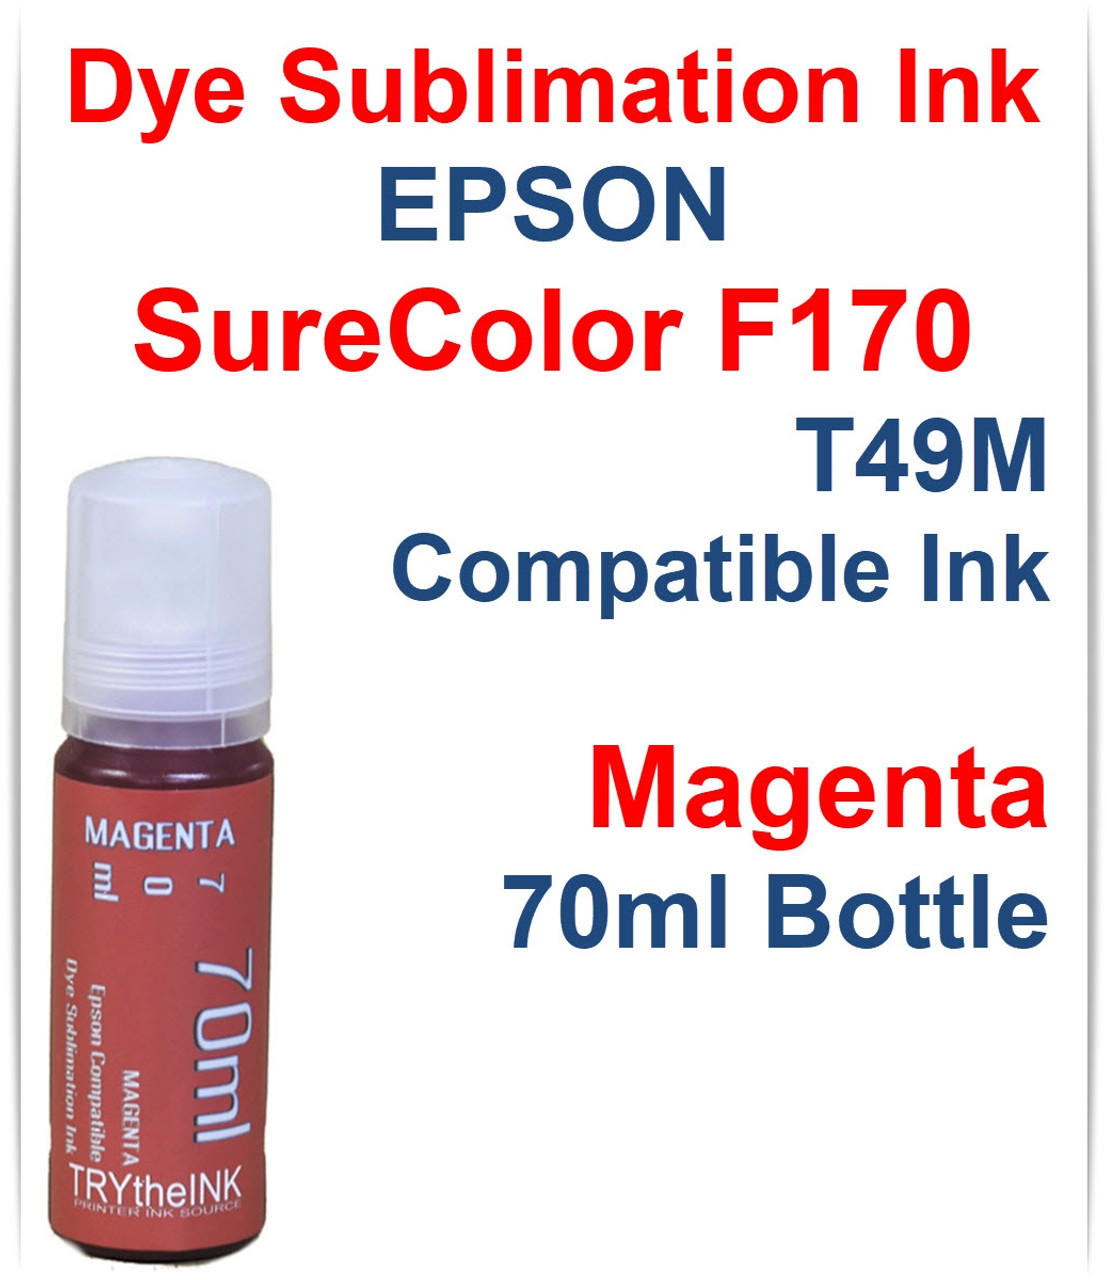 Magenta 70ml Dye Sublimation Ink for EPSON SureColor F170 printer